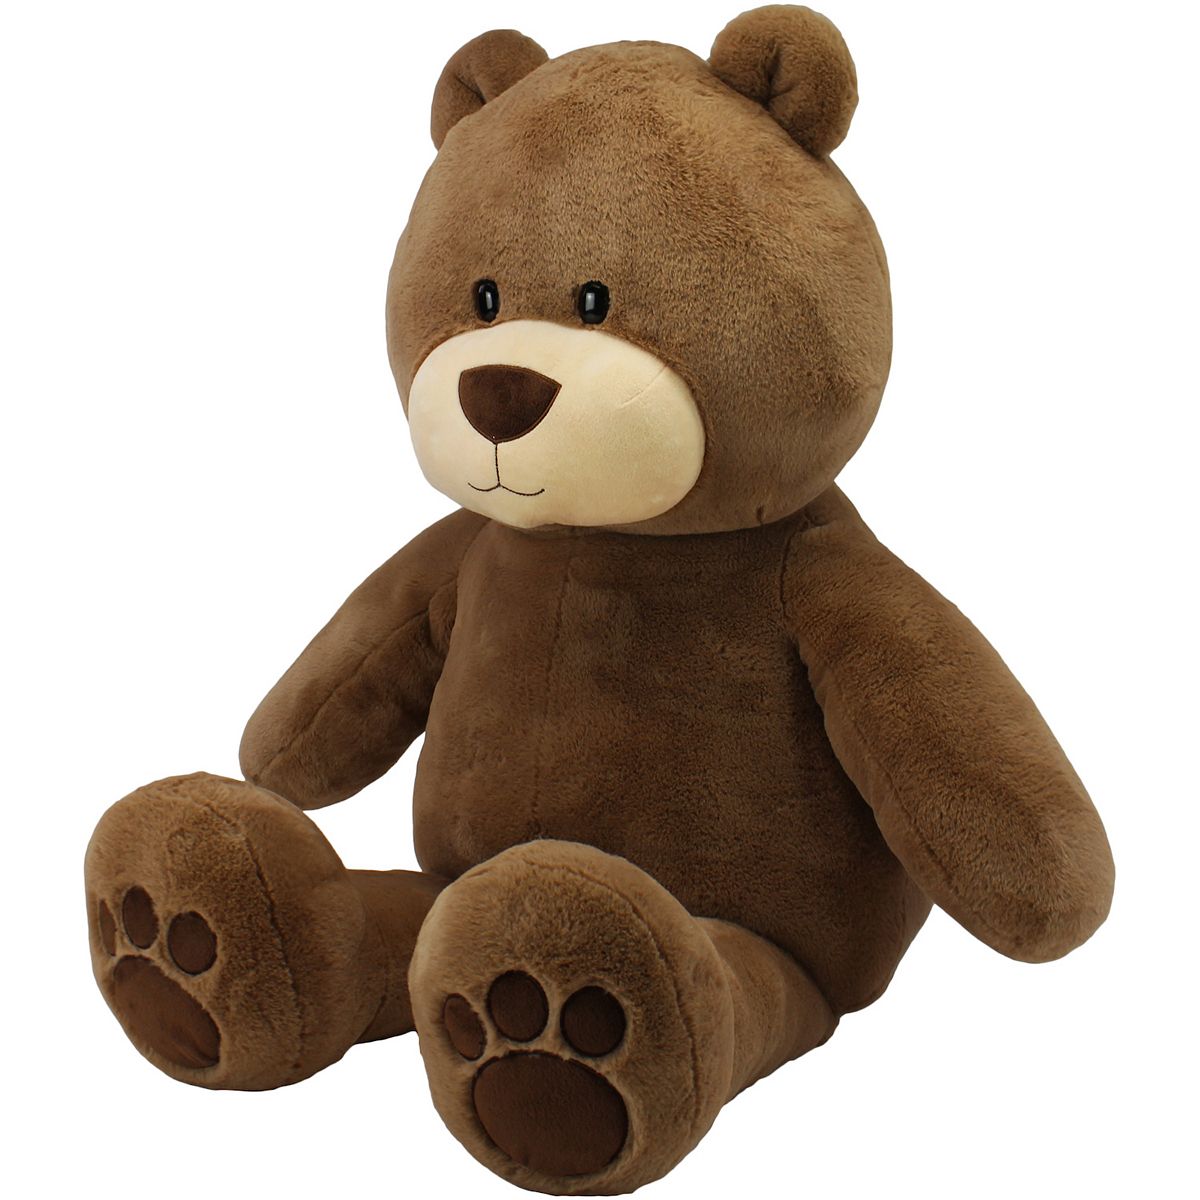 54" Animal Adventure Sqoosh2Poof Stuffed Animal Plush Toy Bear $14.62 + Free Shipping $49+